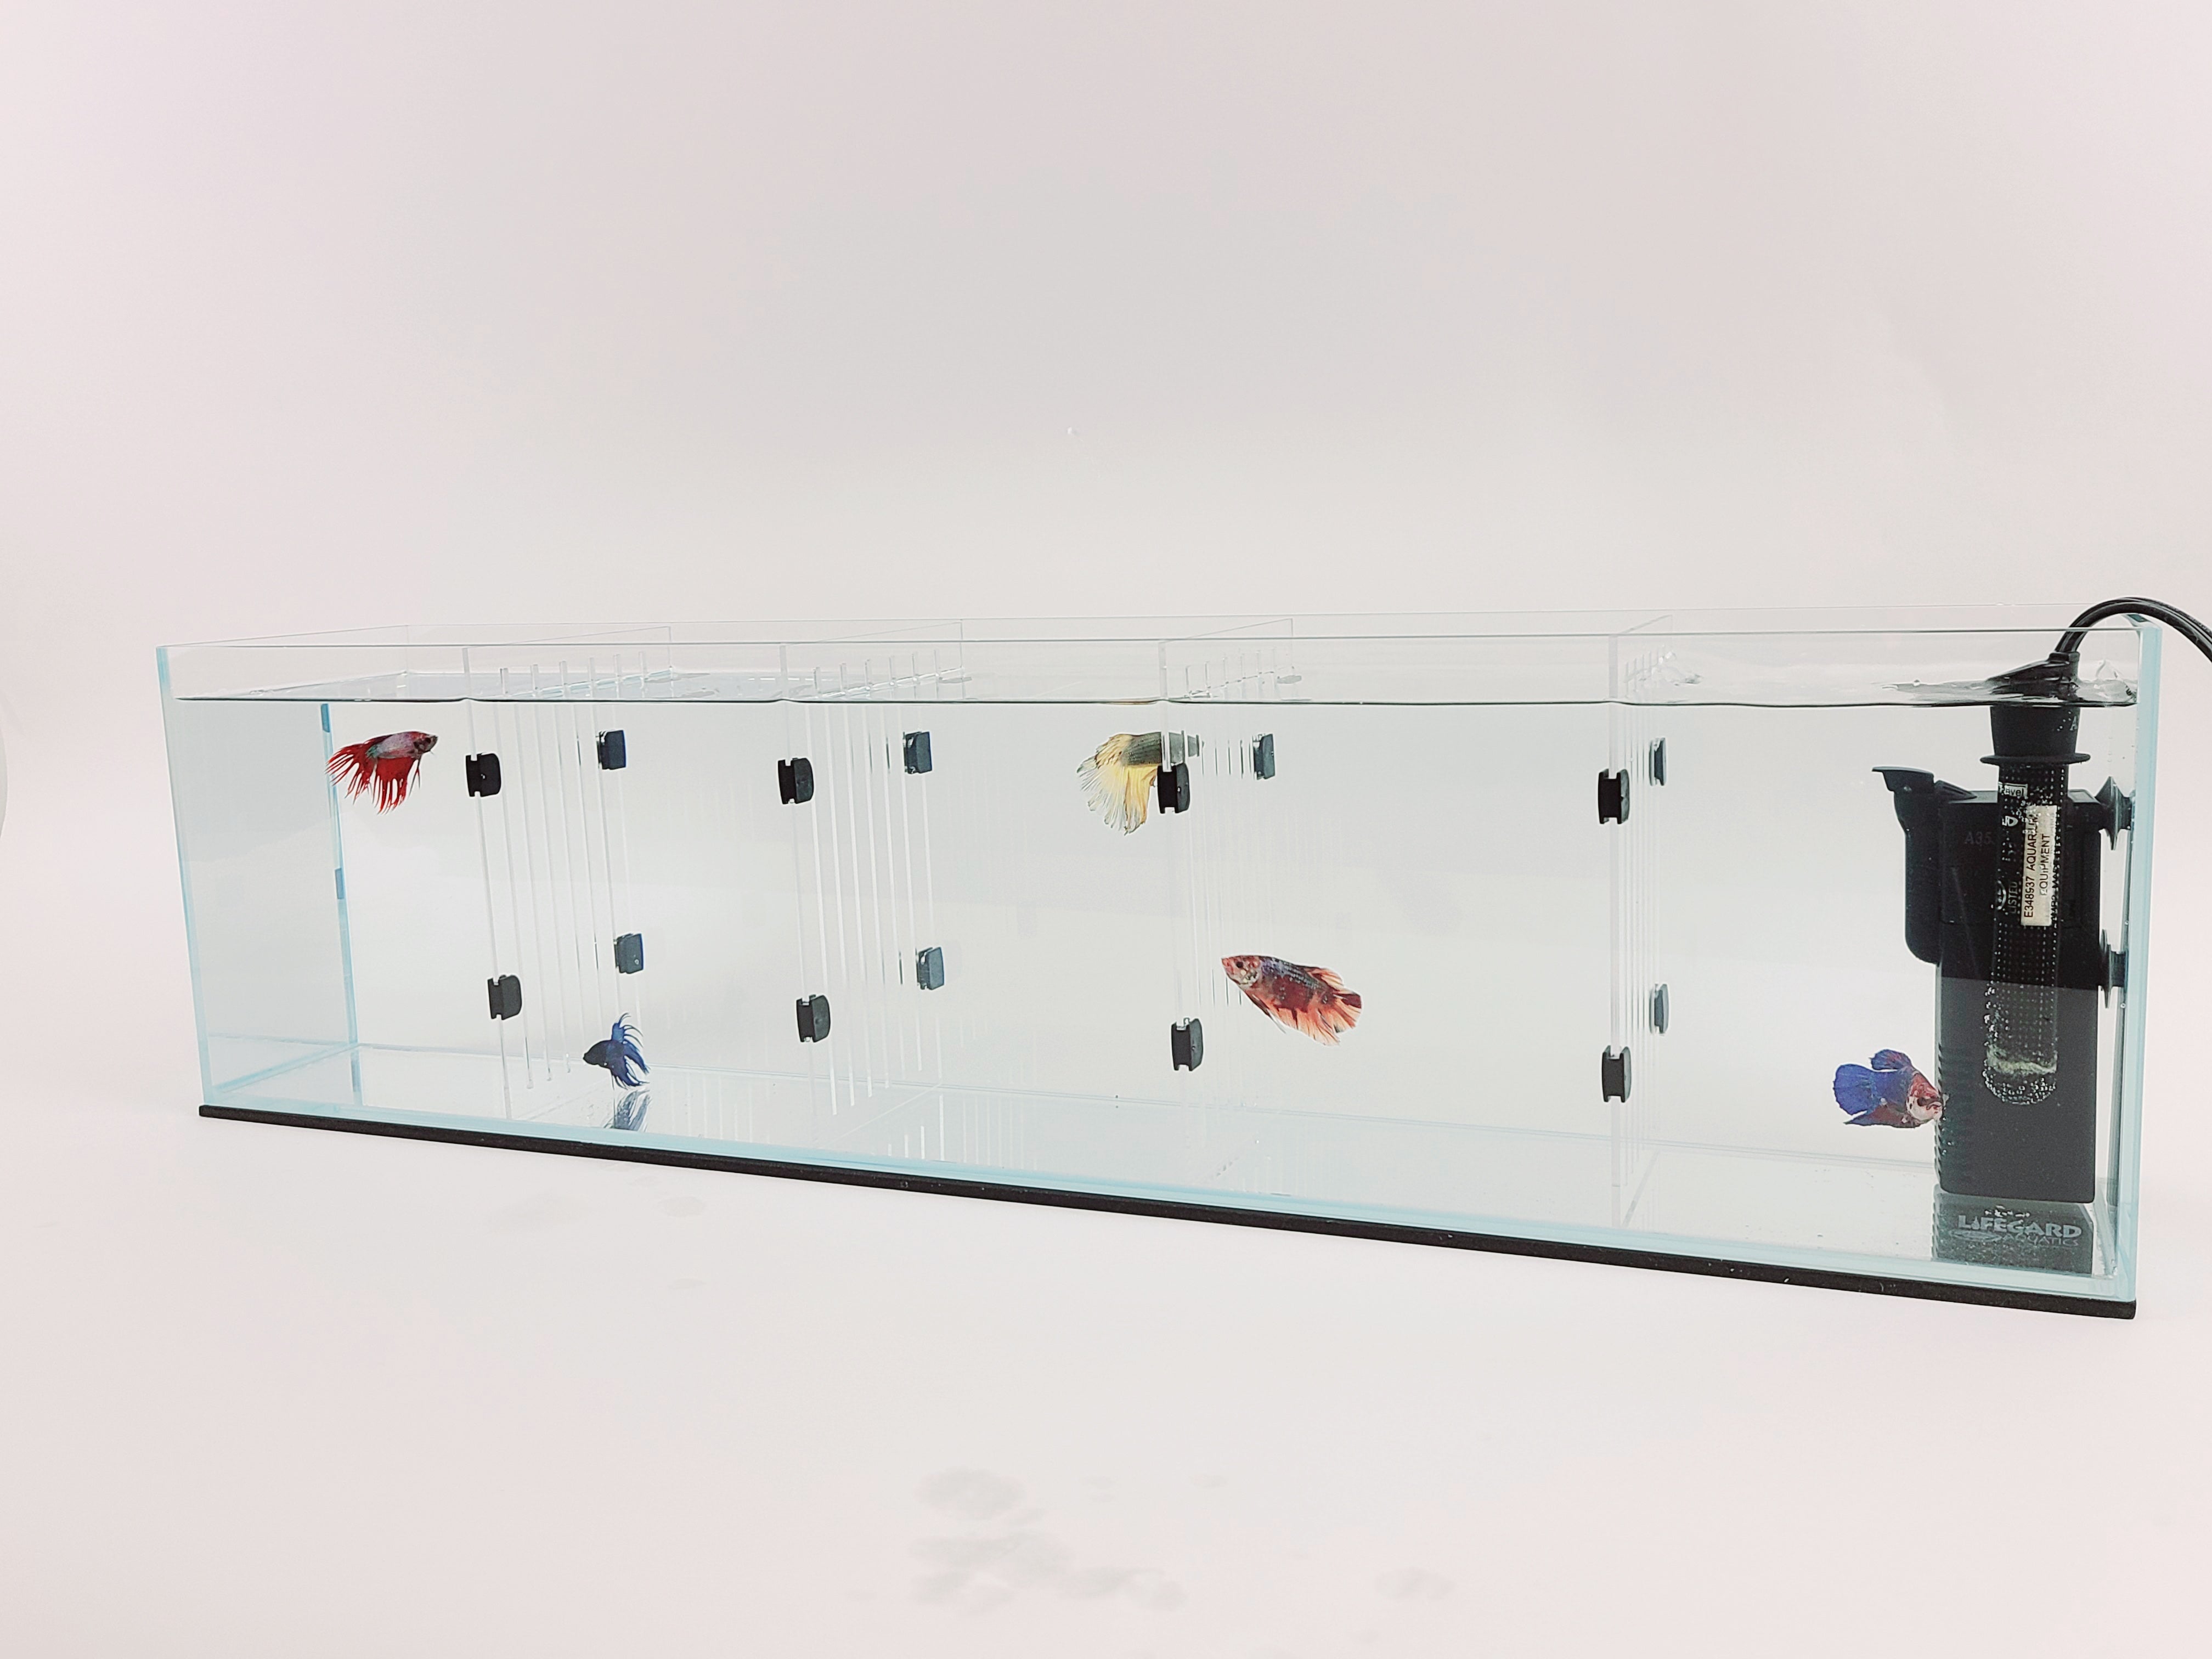 Acrylic Divider Plate for 6 Gallon Bookshelf Aquariums - CLEAR